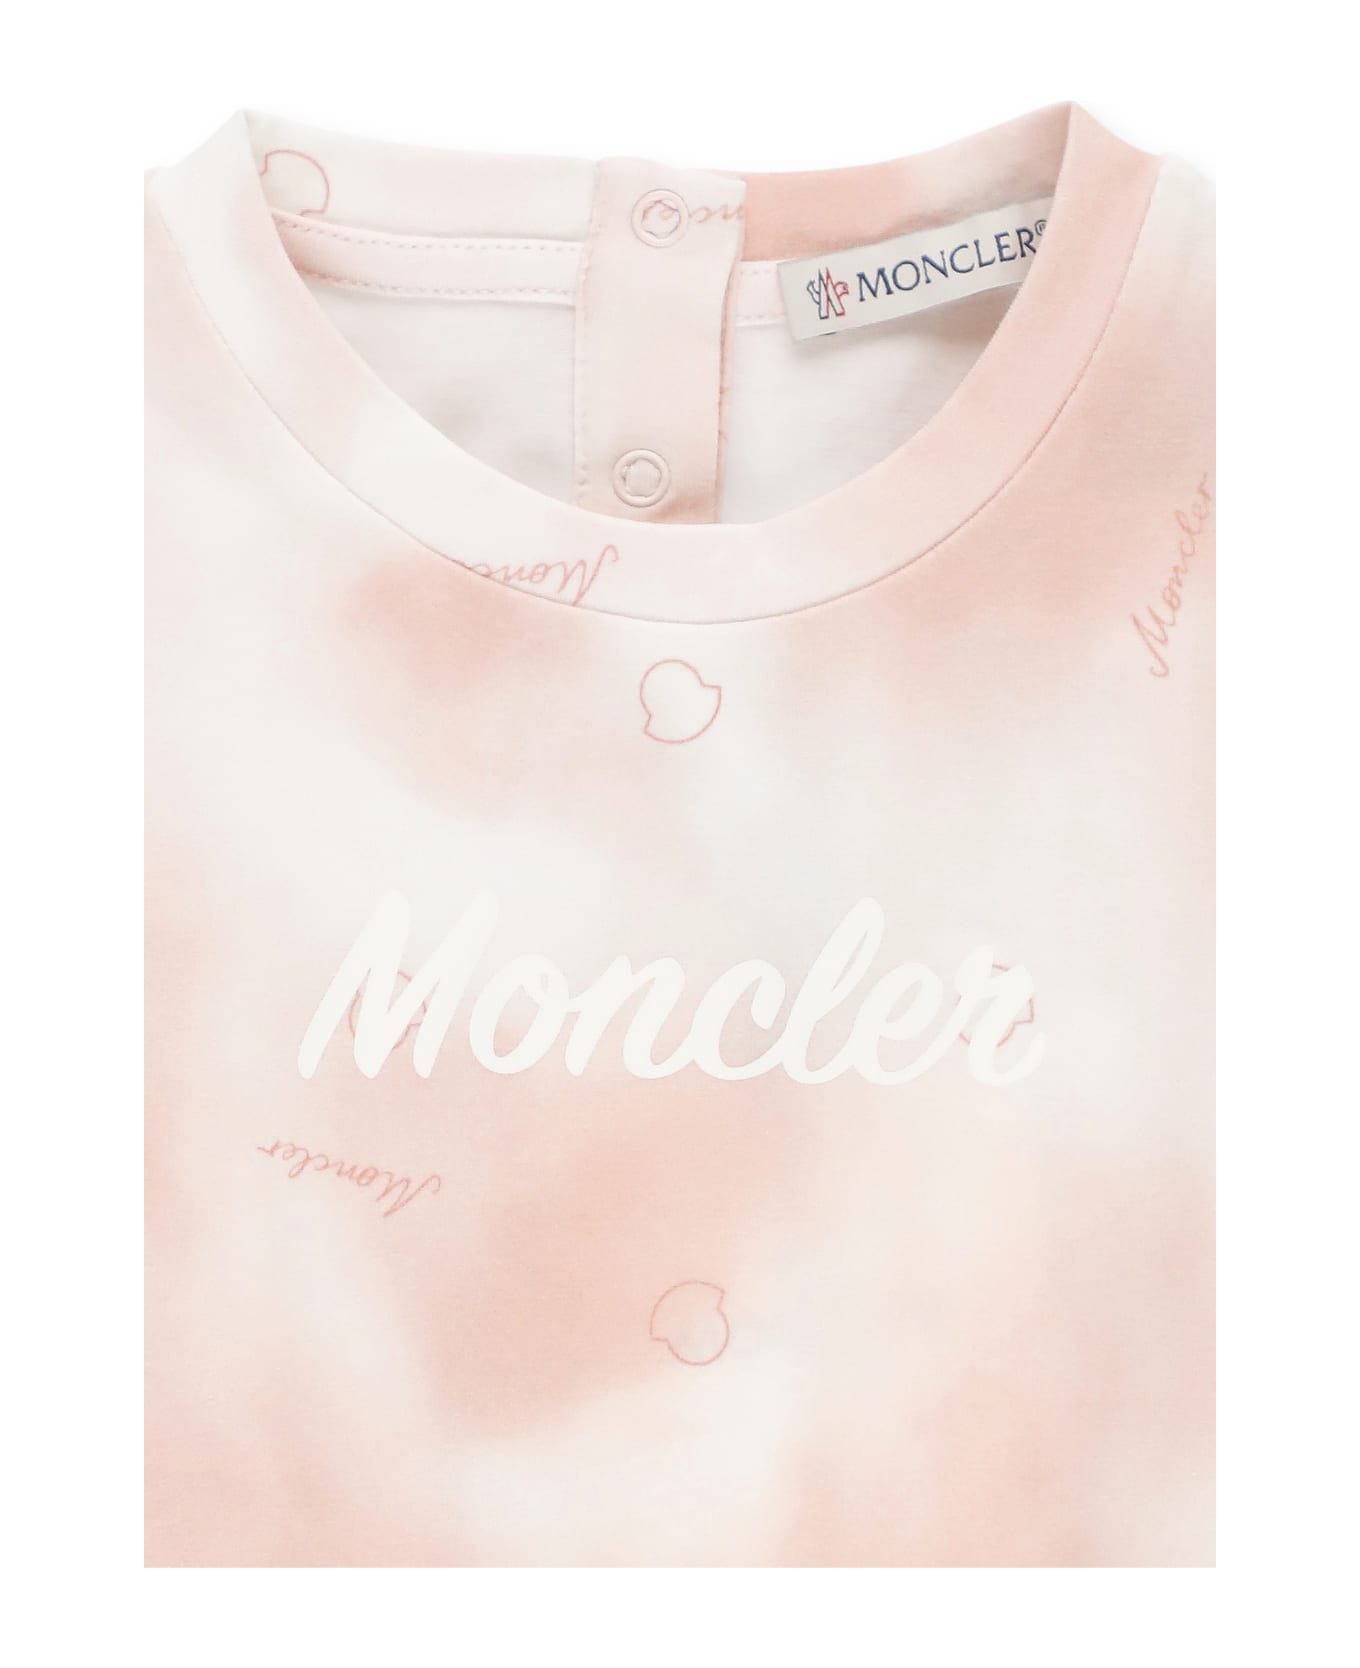 Moncler Cotton Dress - Pink